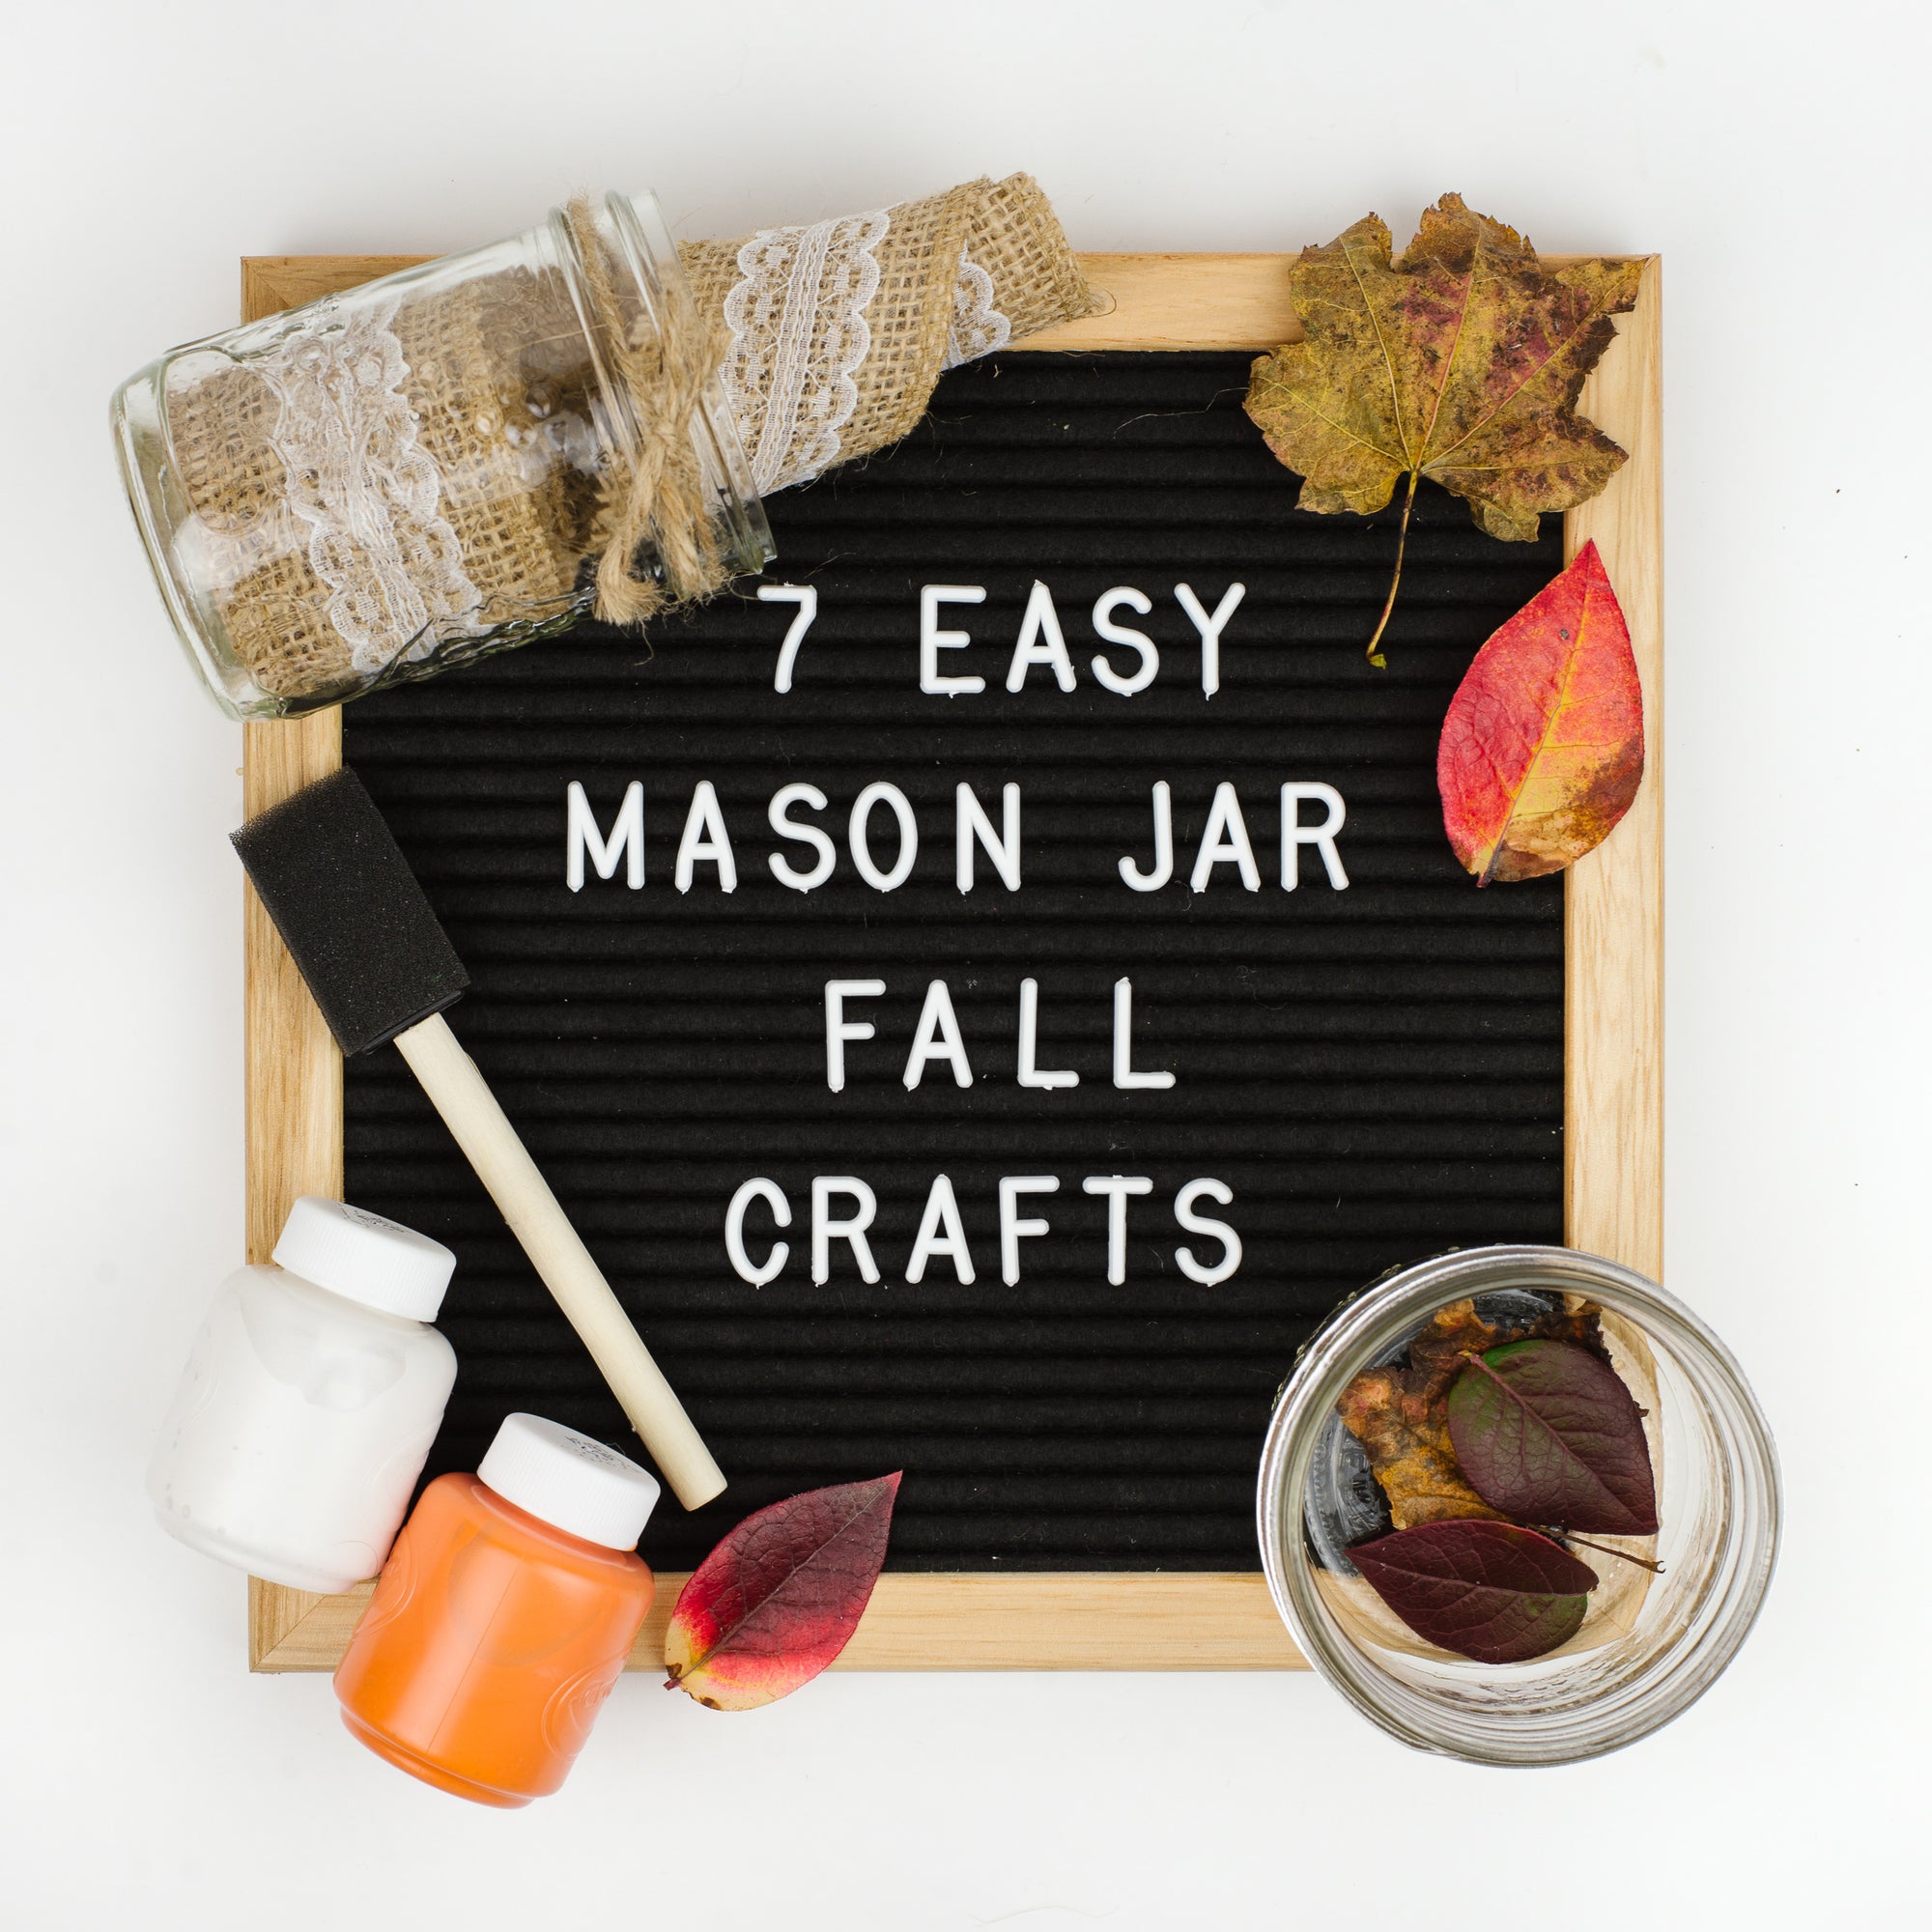 7 Easy Mason Jar Crafts to Make This Fall